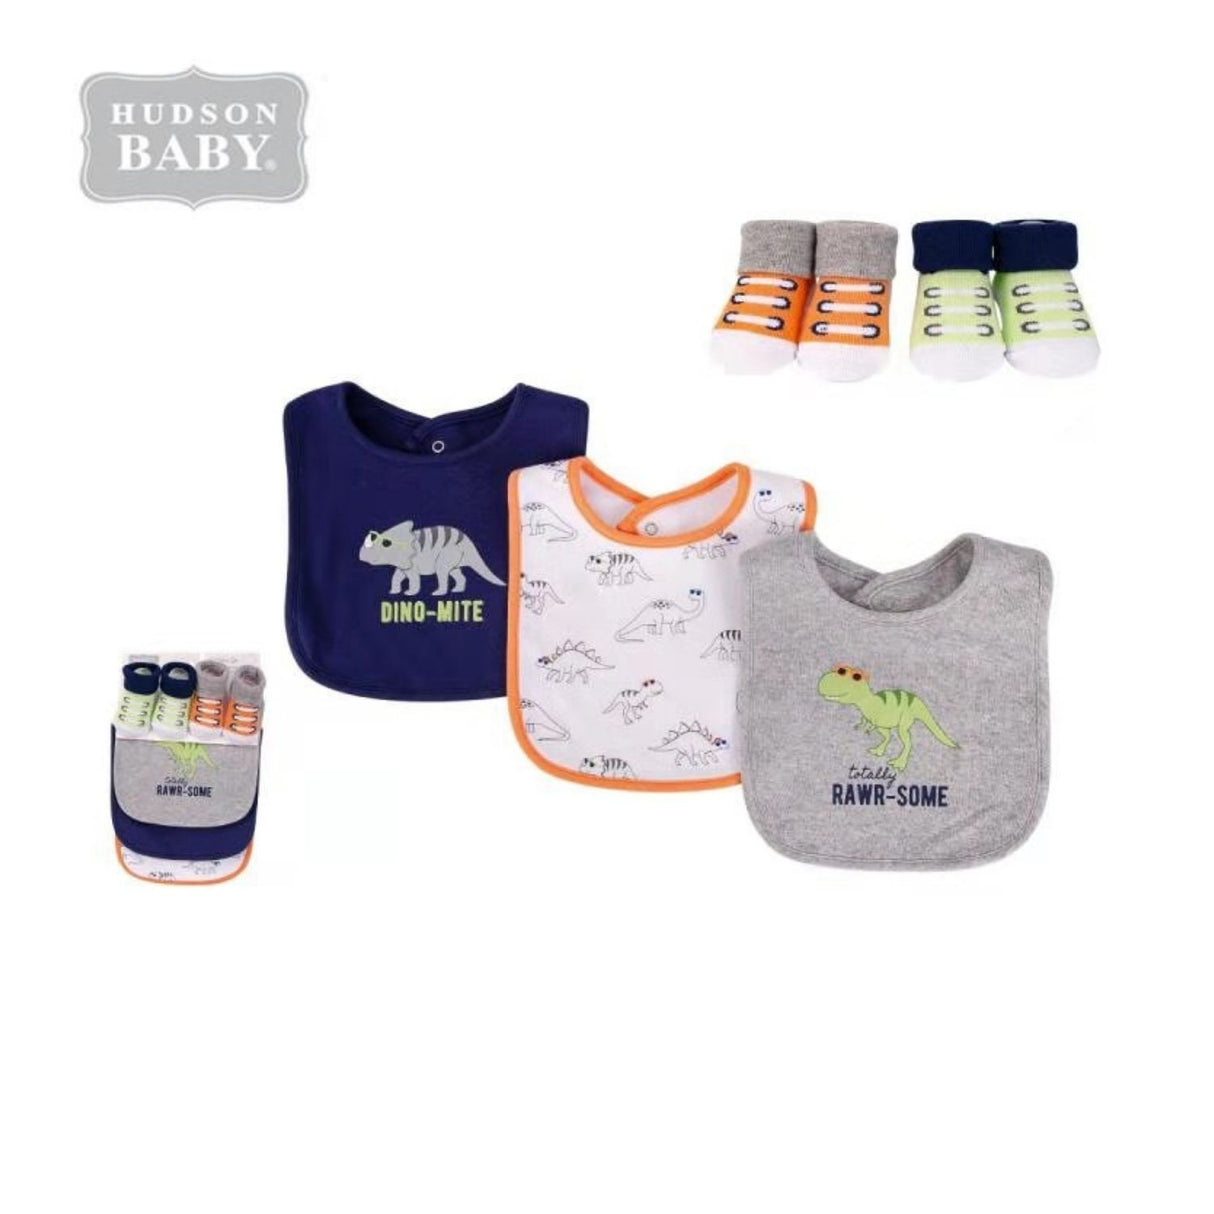 Hudson Baby Charming Premium Quality Bibs And Socks Set